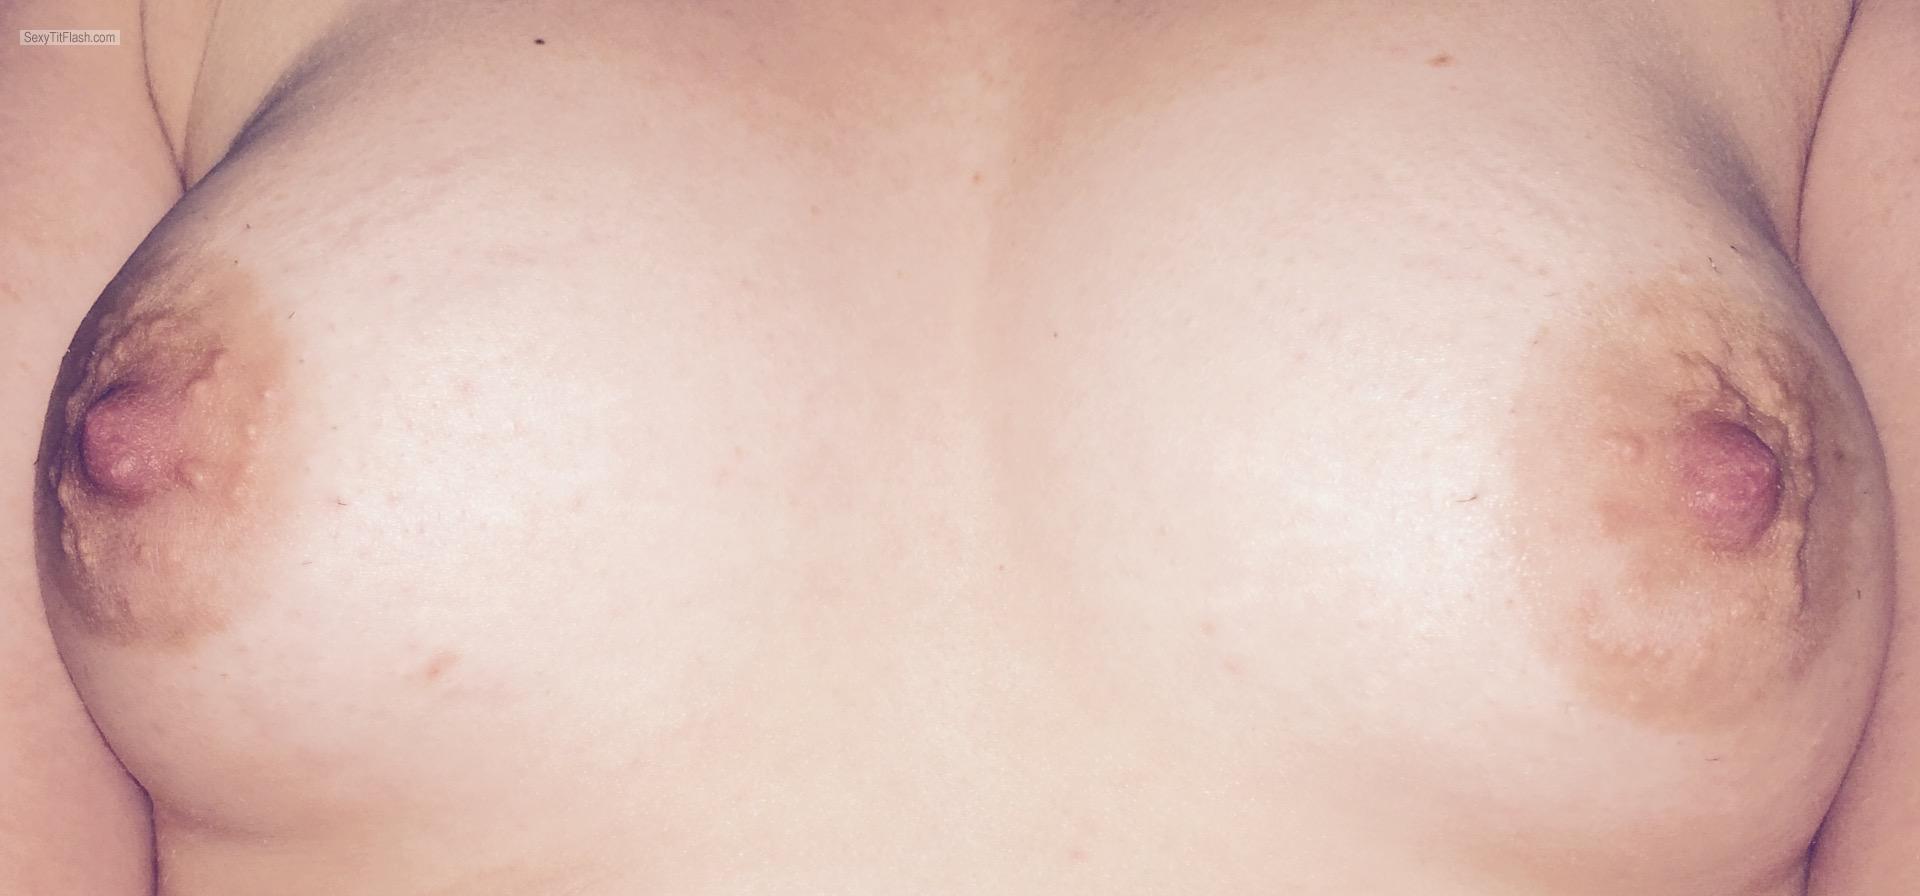 Tit Flash: My Small Tits (Selfie) - Smallperky from Australia